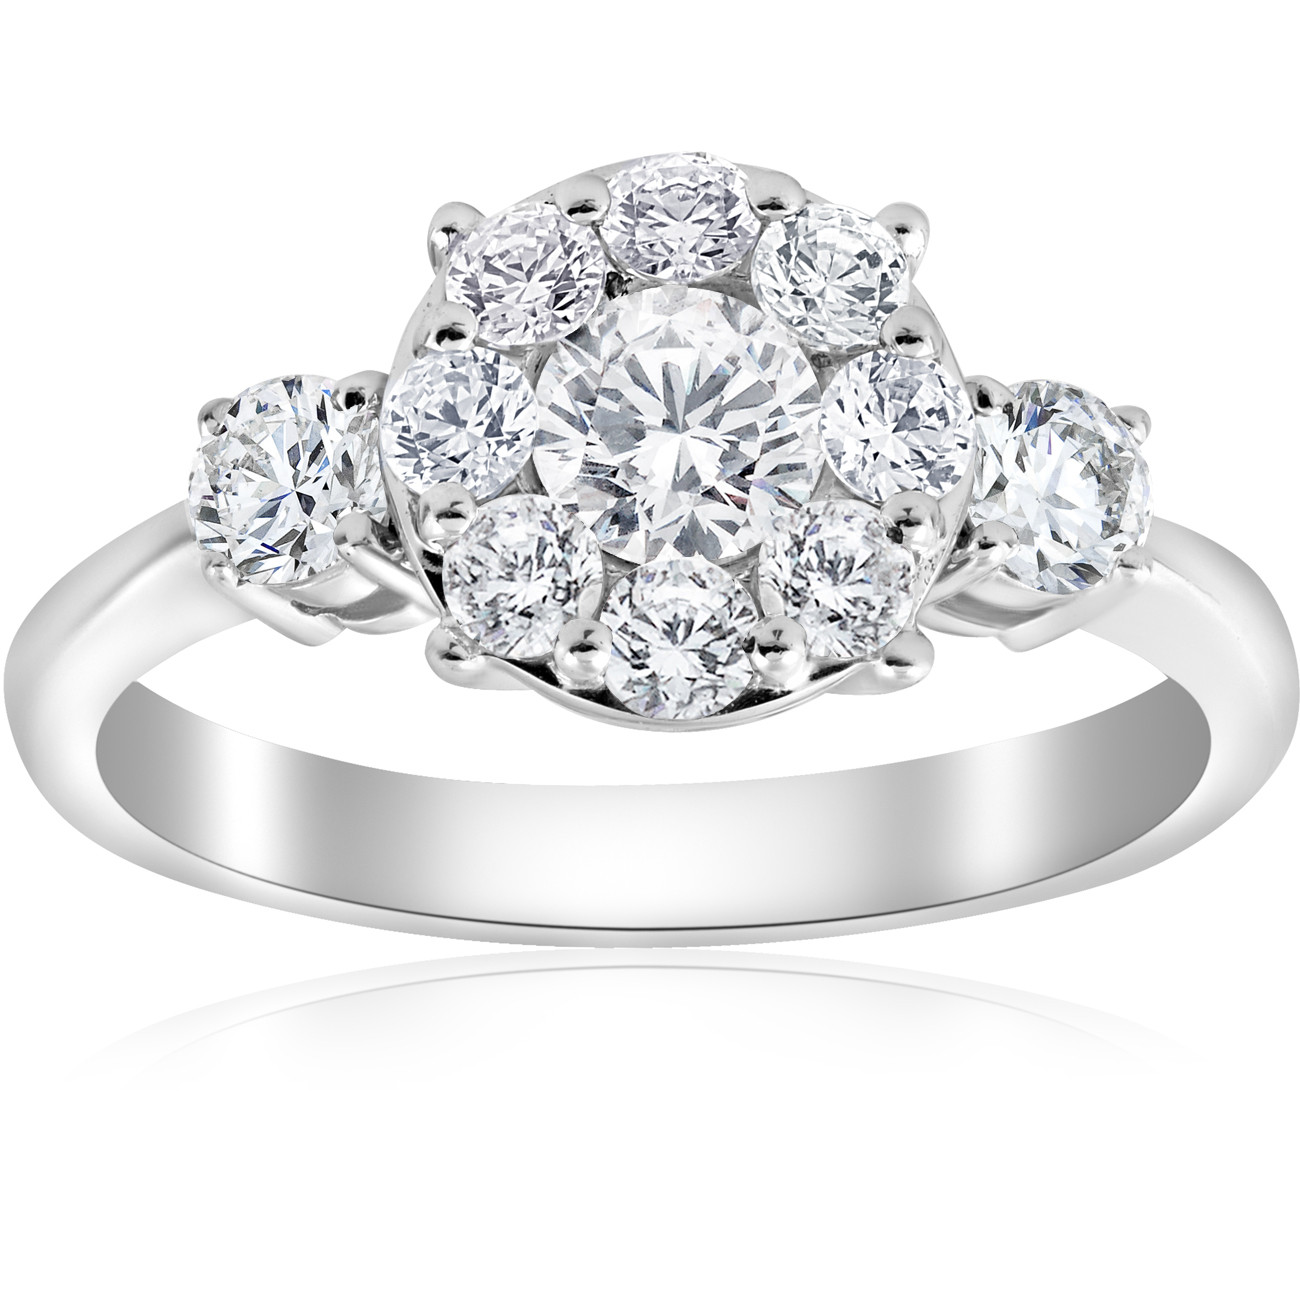 4ct Diamond Engagement Ring
 1 1 4ct Round Diamond Engagement Ring Pave Halo 3 Stone